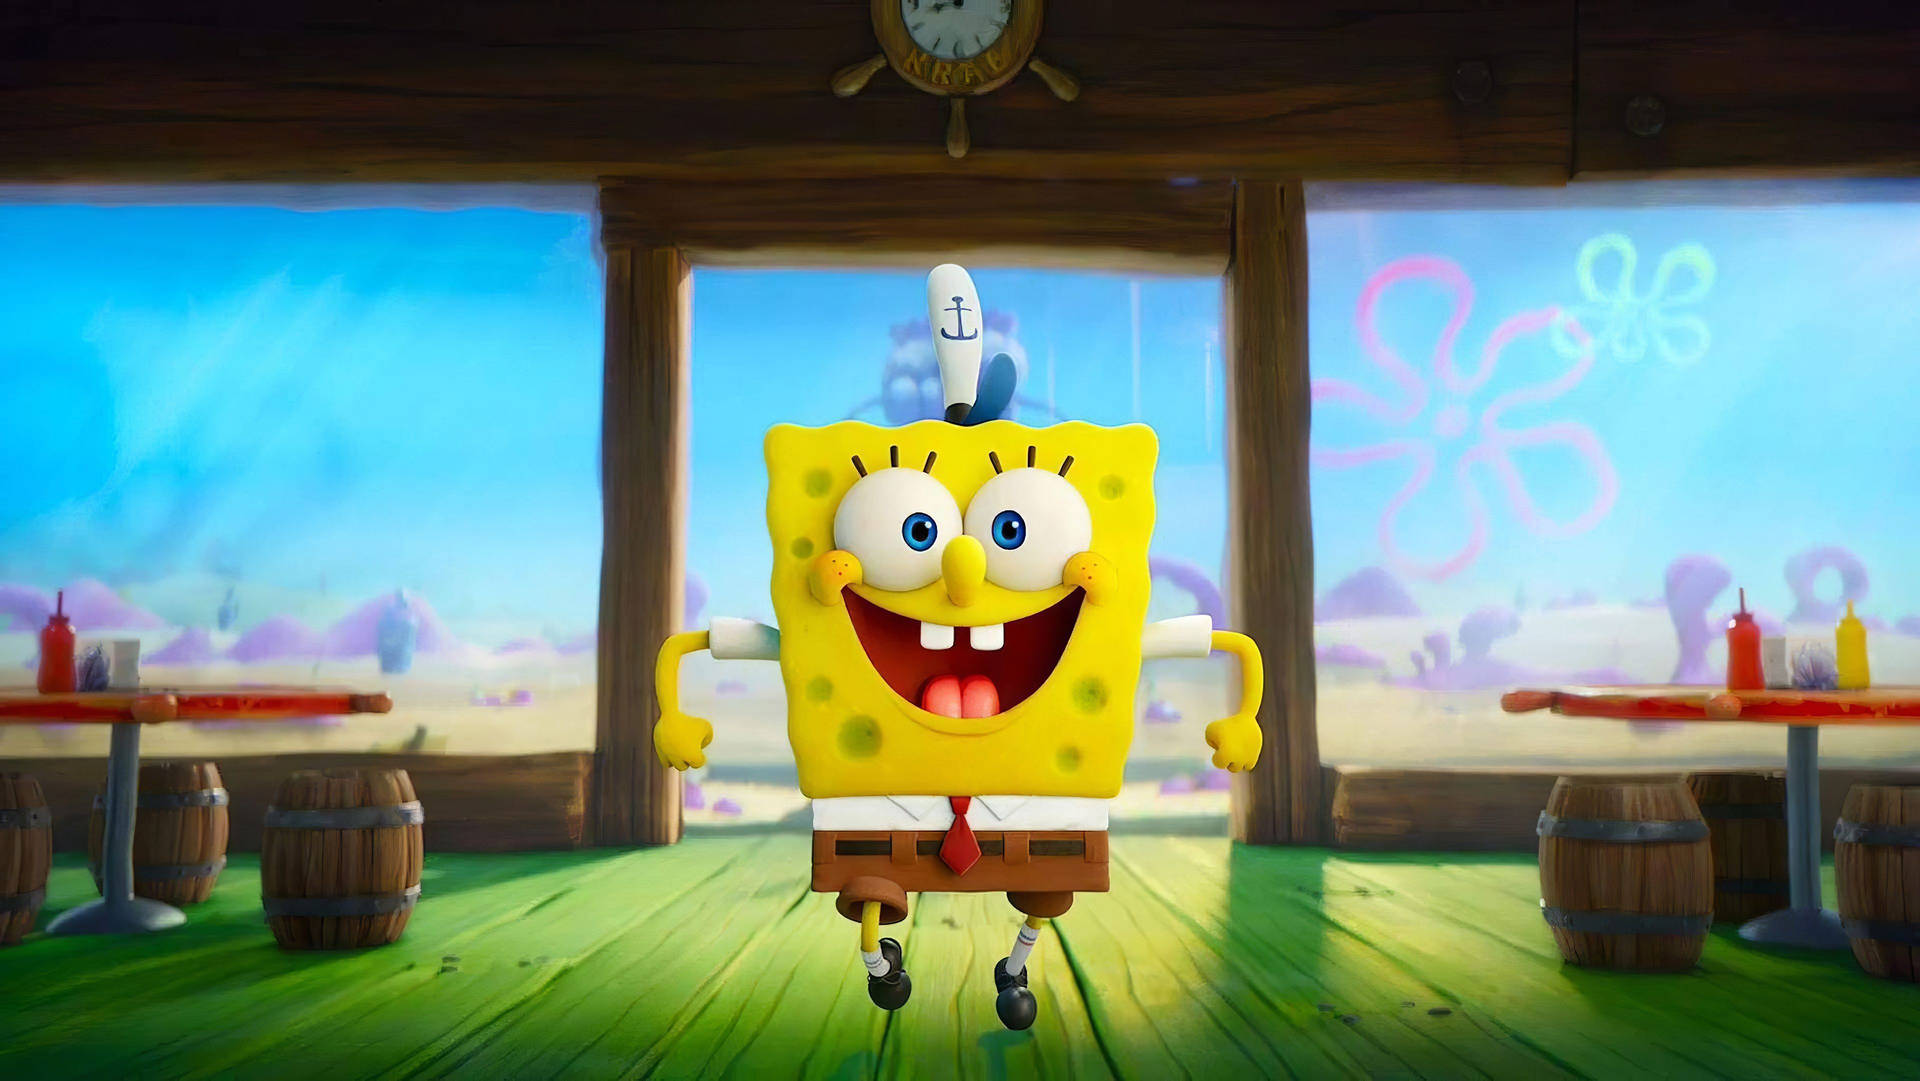 Cute Spongebob Squarepants Entering Krusty Crab Background